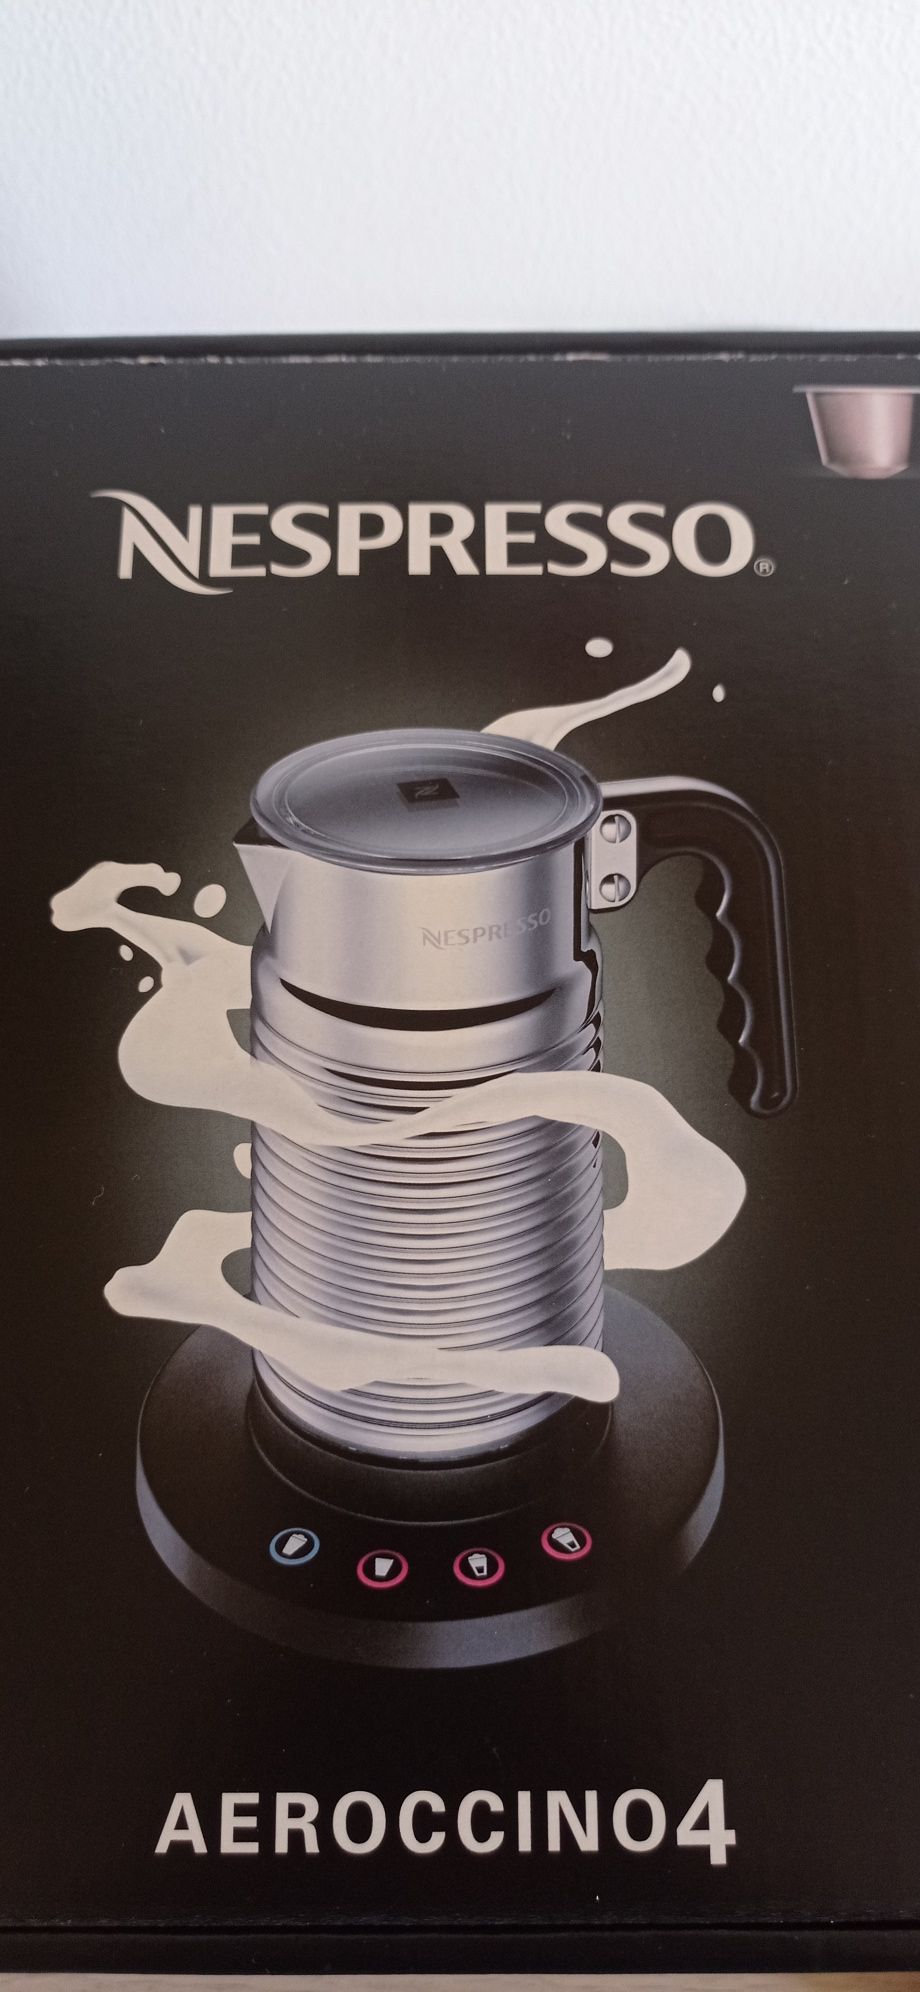 Aerocinno 4 Nespresso